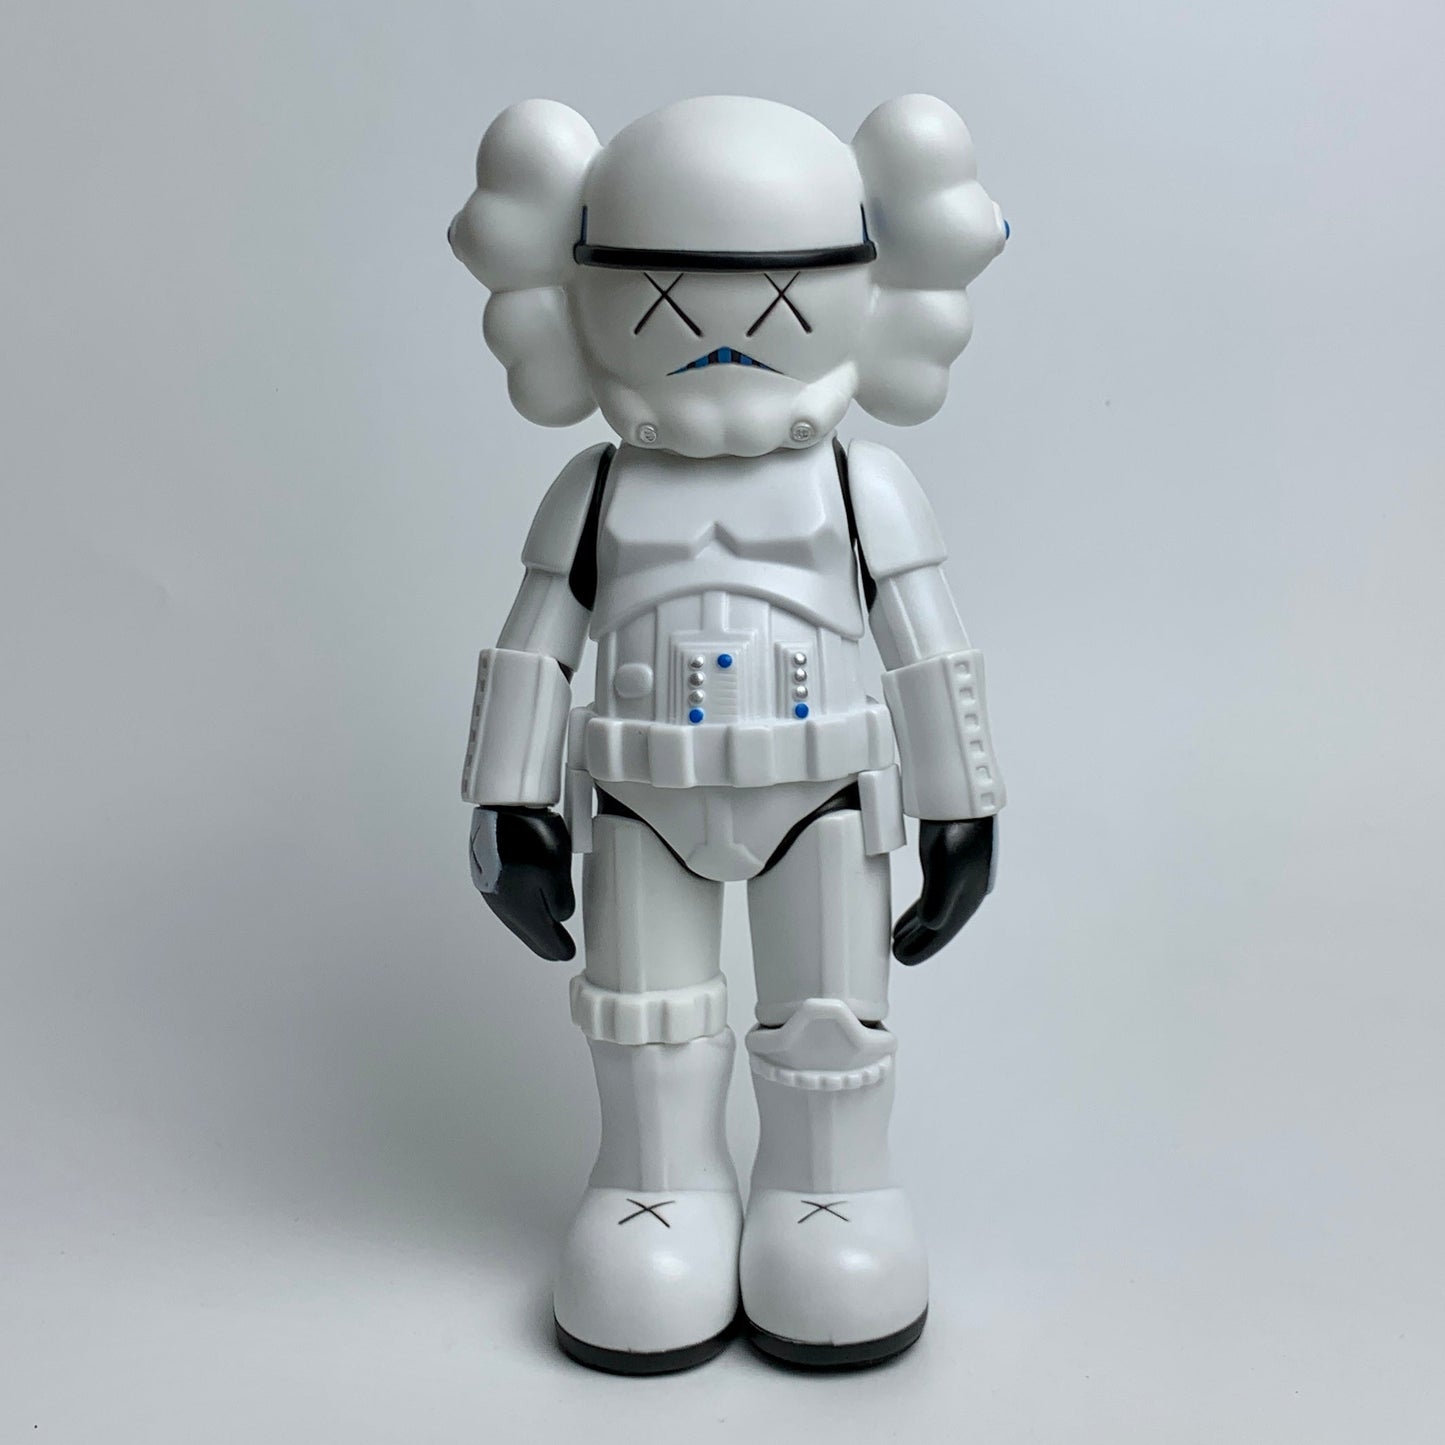 Stormtrooper Companion vinyl figure by KAWS